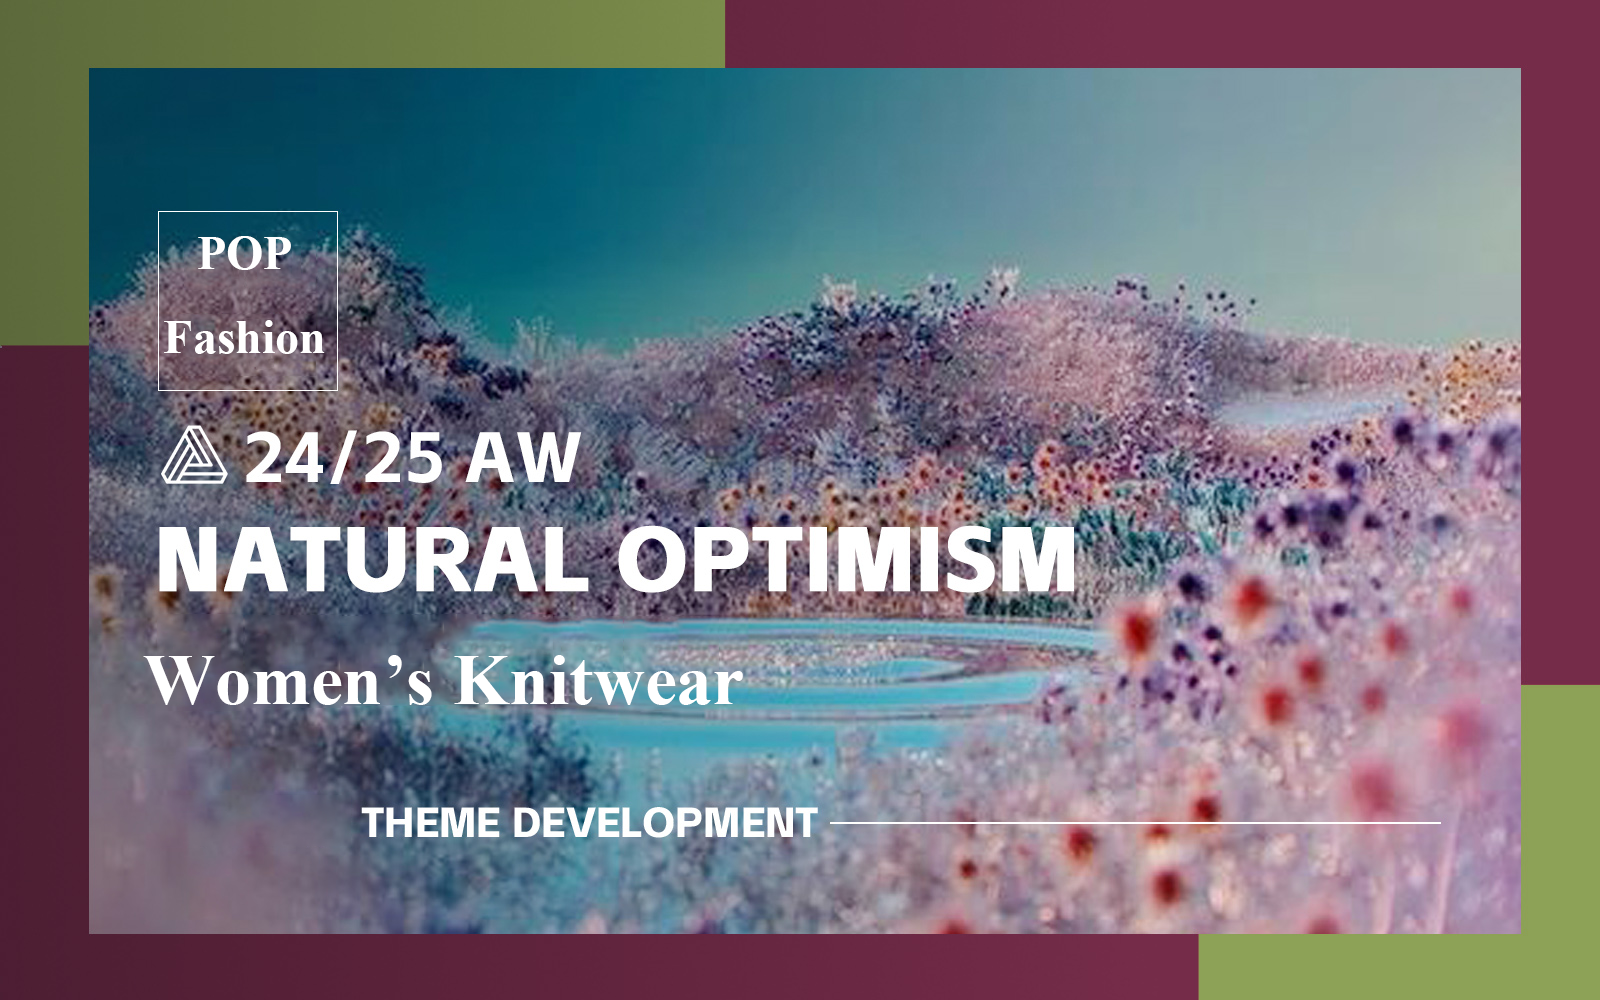 Natural Optimism -- A/W 24/25 Design Development of Women's Knitwear